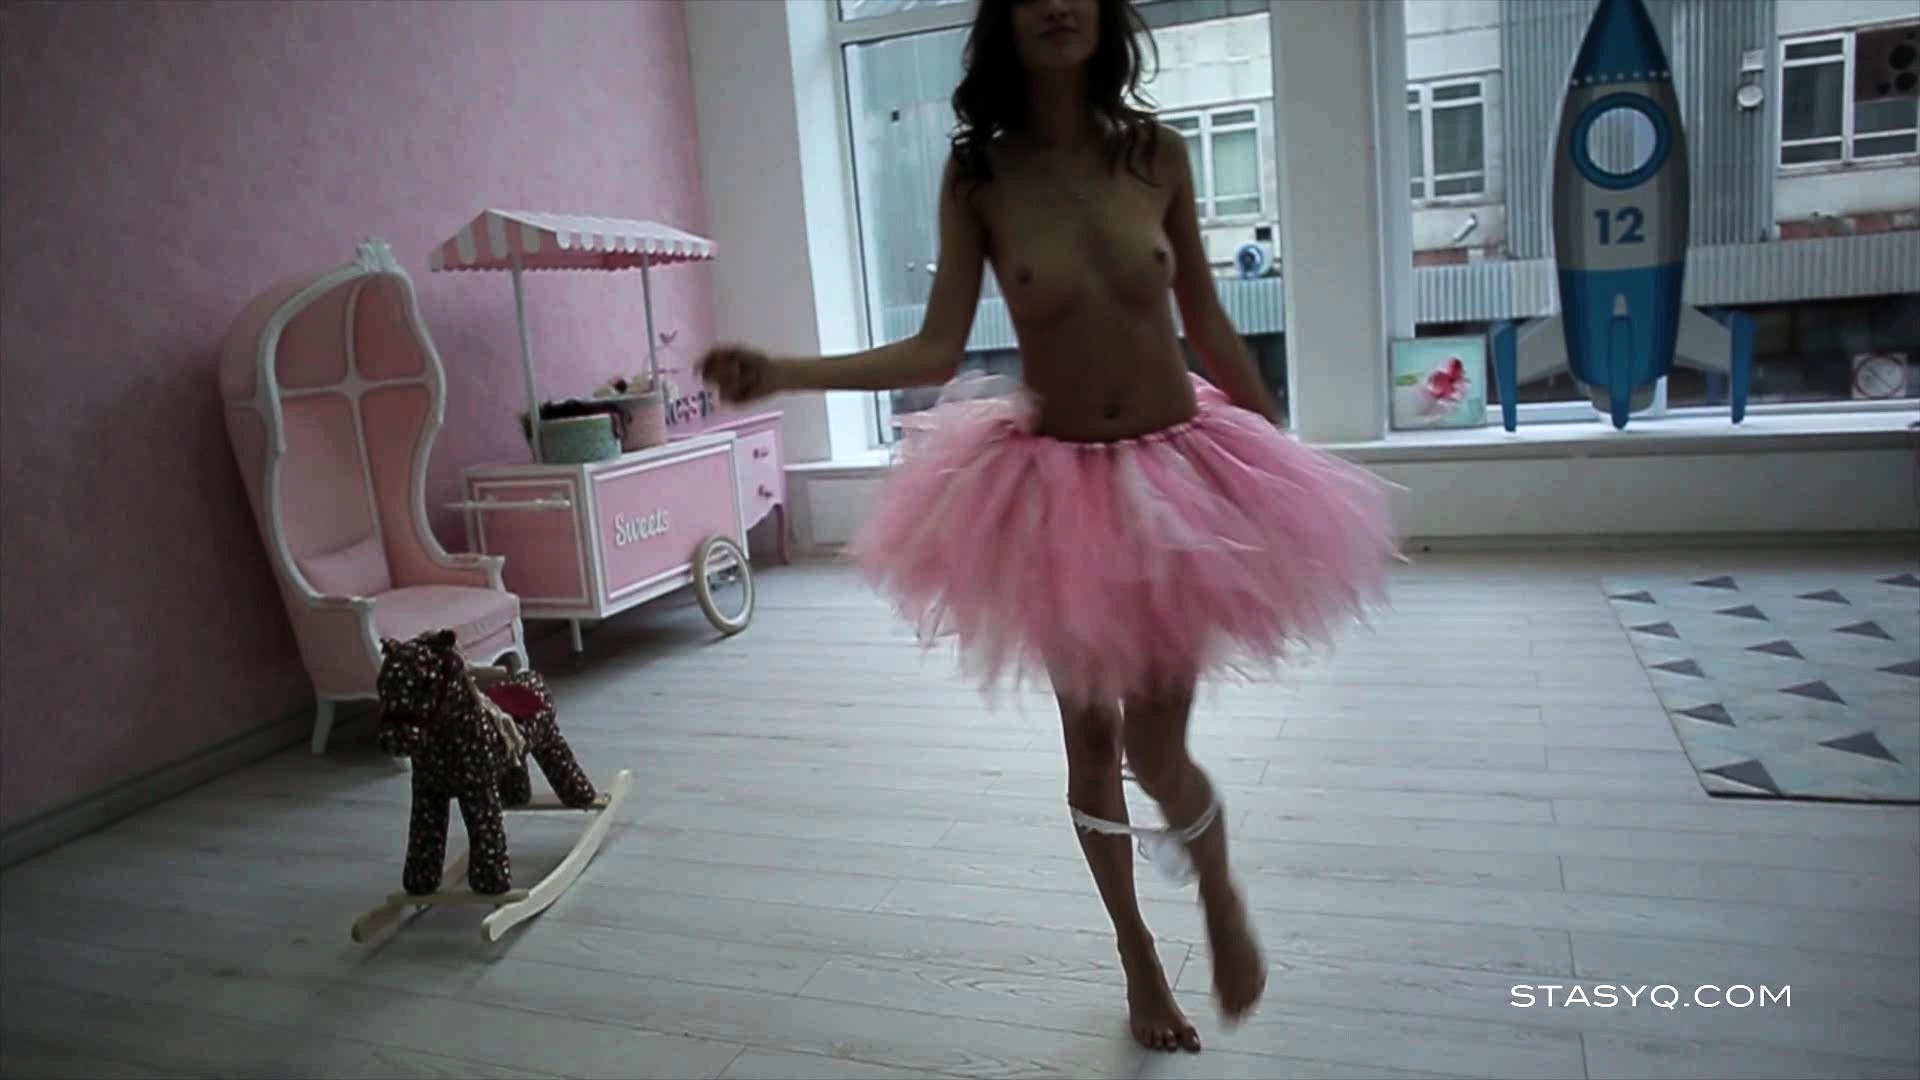 Free Mobile Porn - Sveta Dancing Wearing A Pink Tutu Dress - 3362073 - IcePorn.com